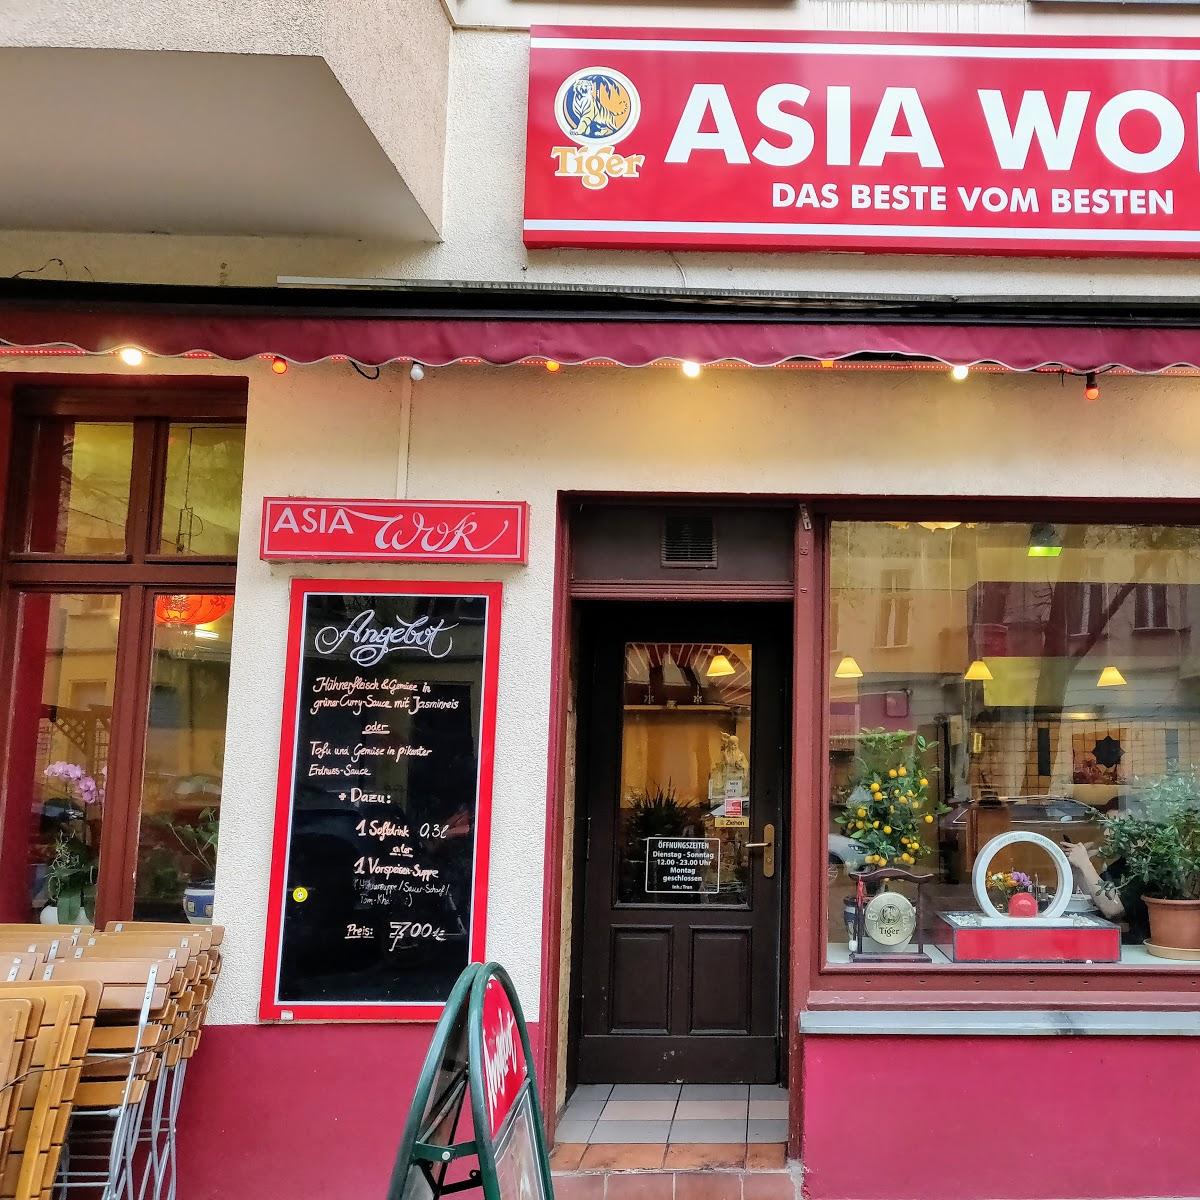 Restaurant "Asia Wok" in Berlin